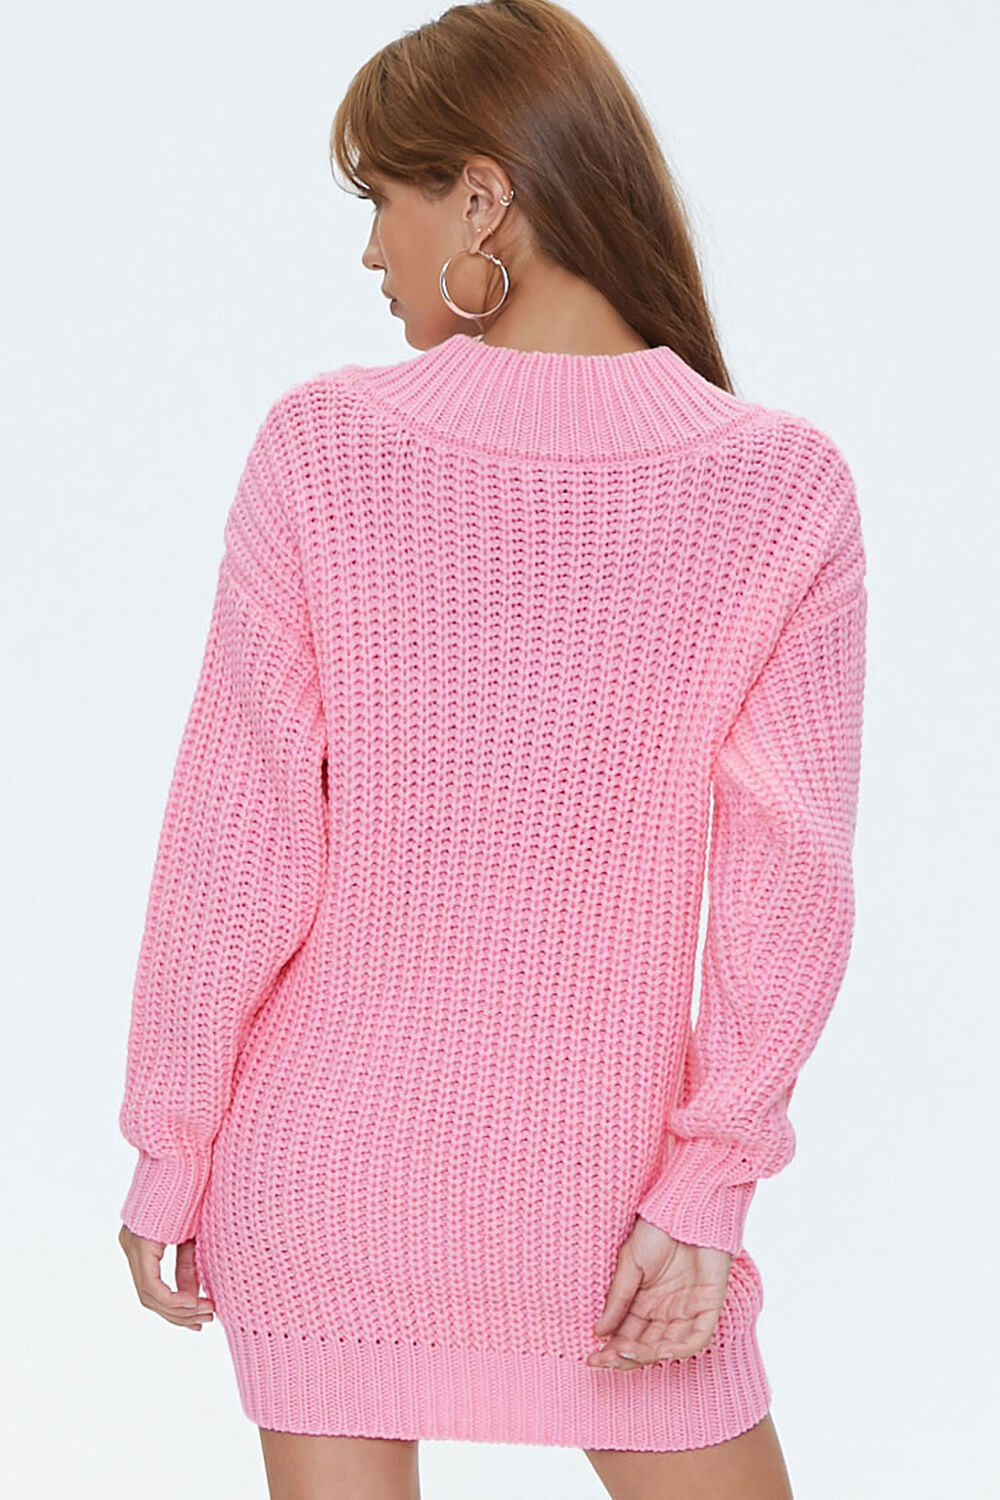 PINK Drop-Sleeve Sweater Dress, image 3